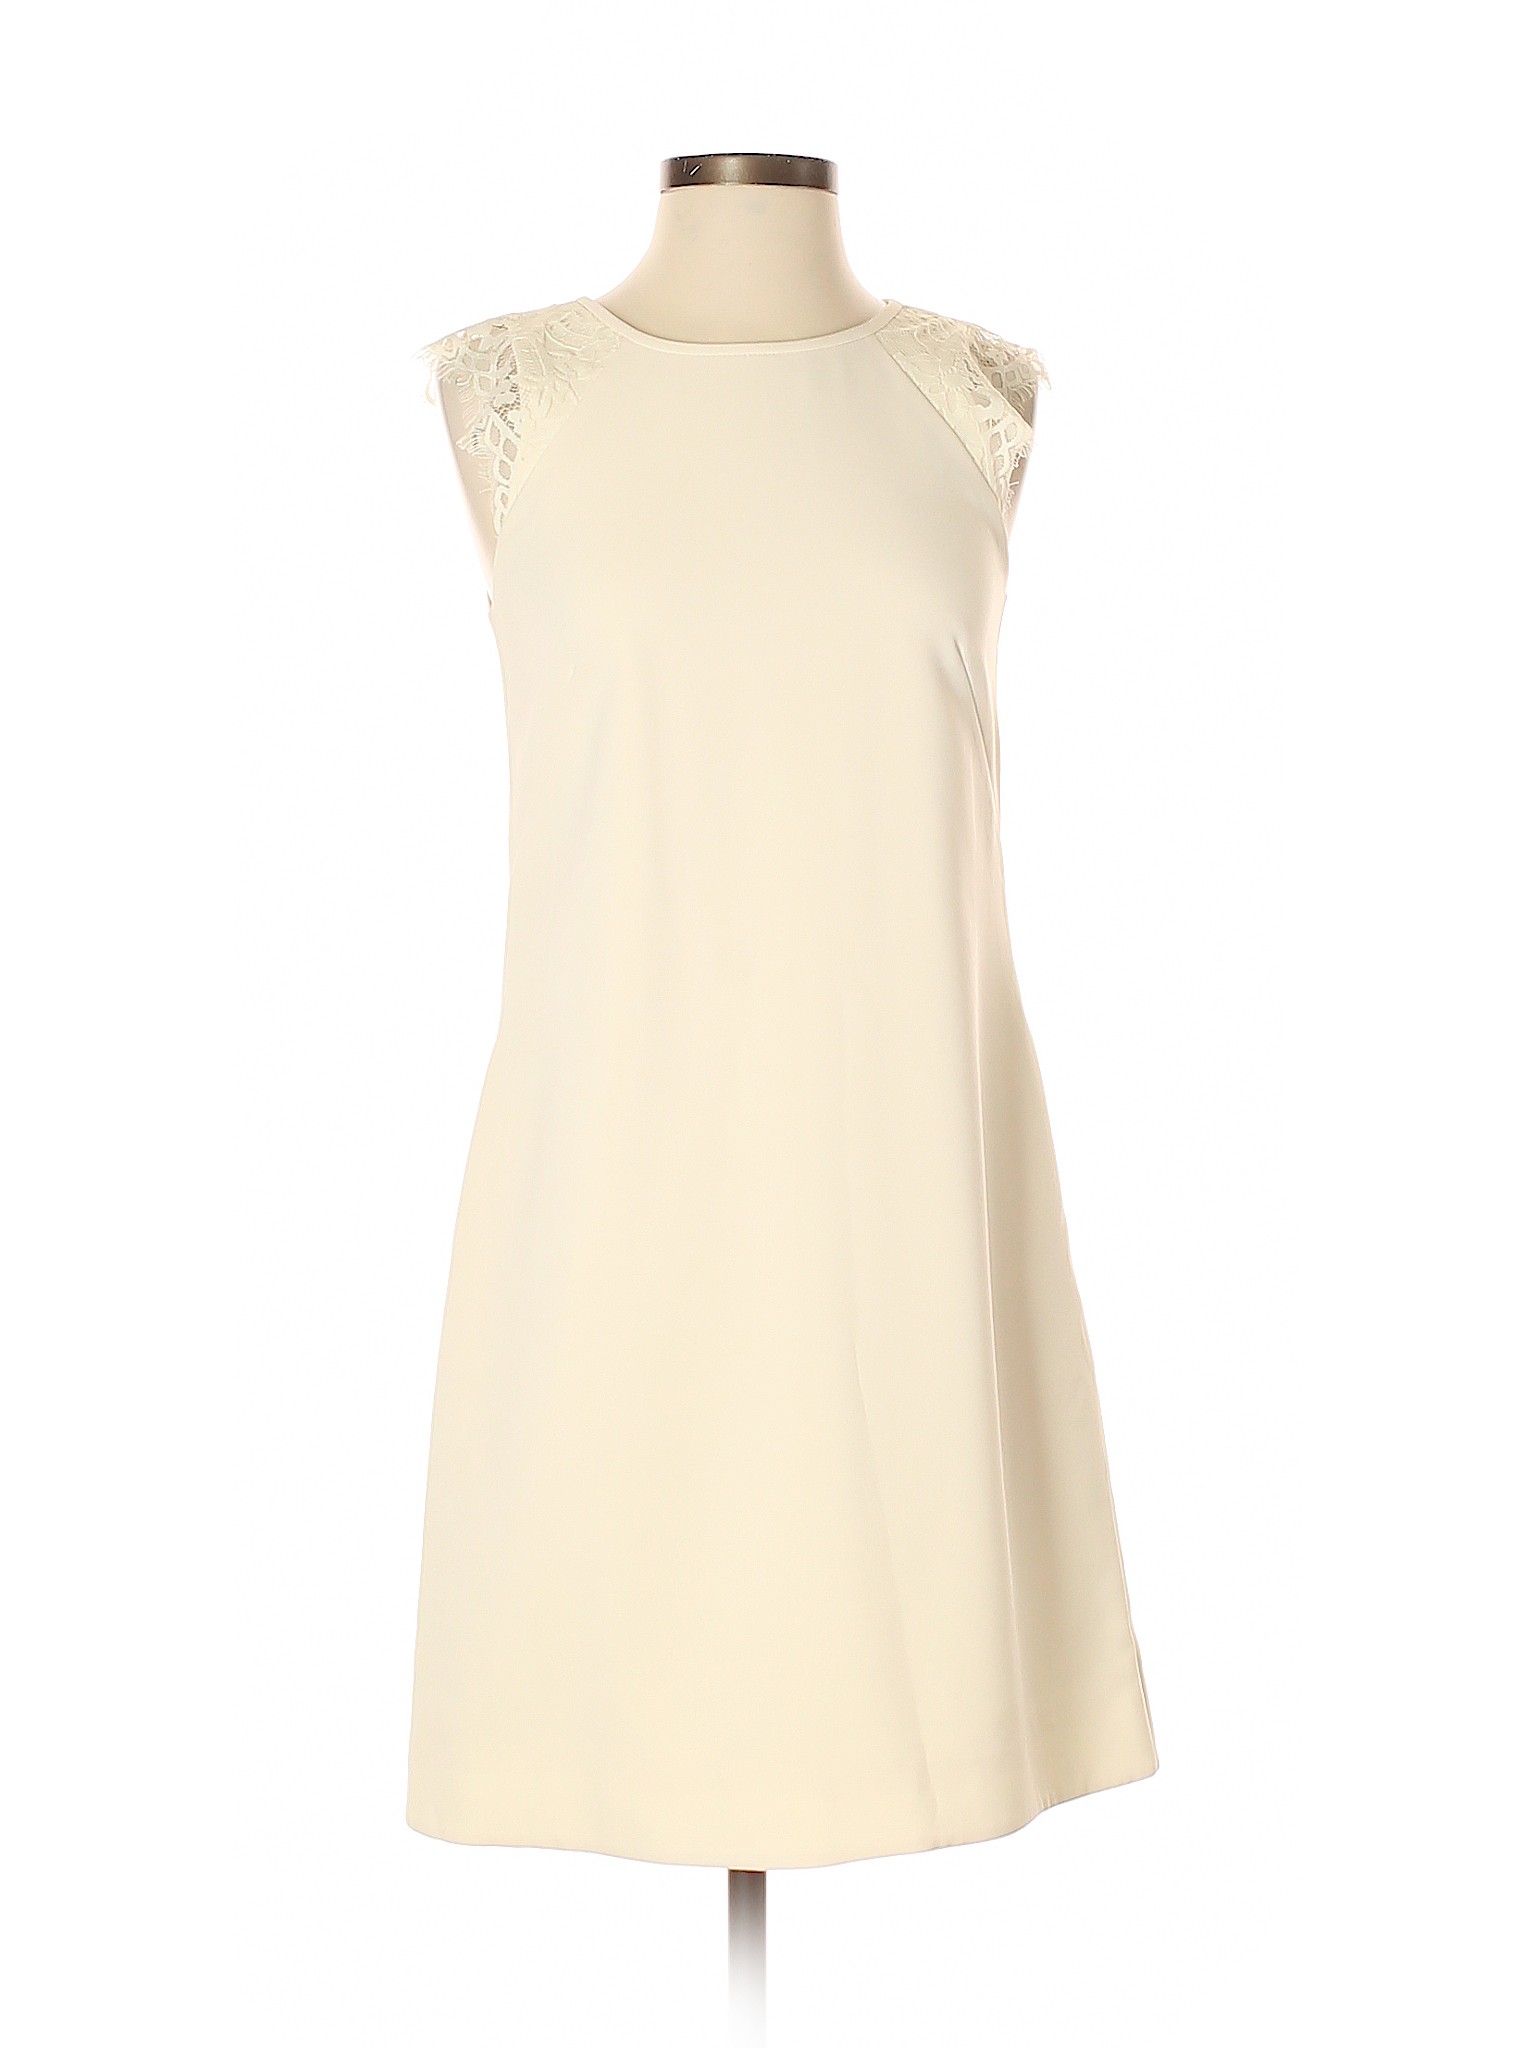 J. Crew Factory Store Women Ivory Casual Dress 0 | eBay